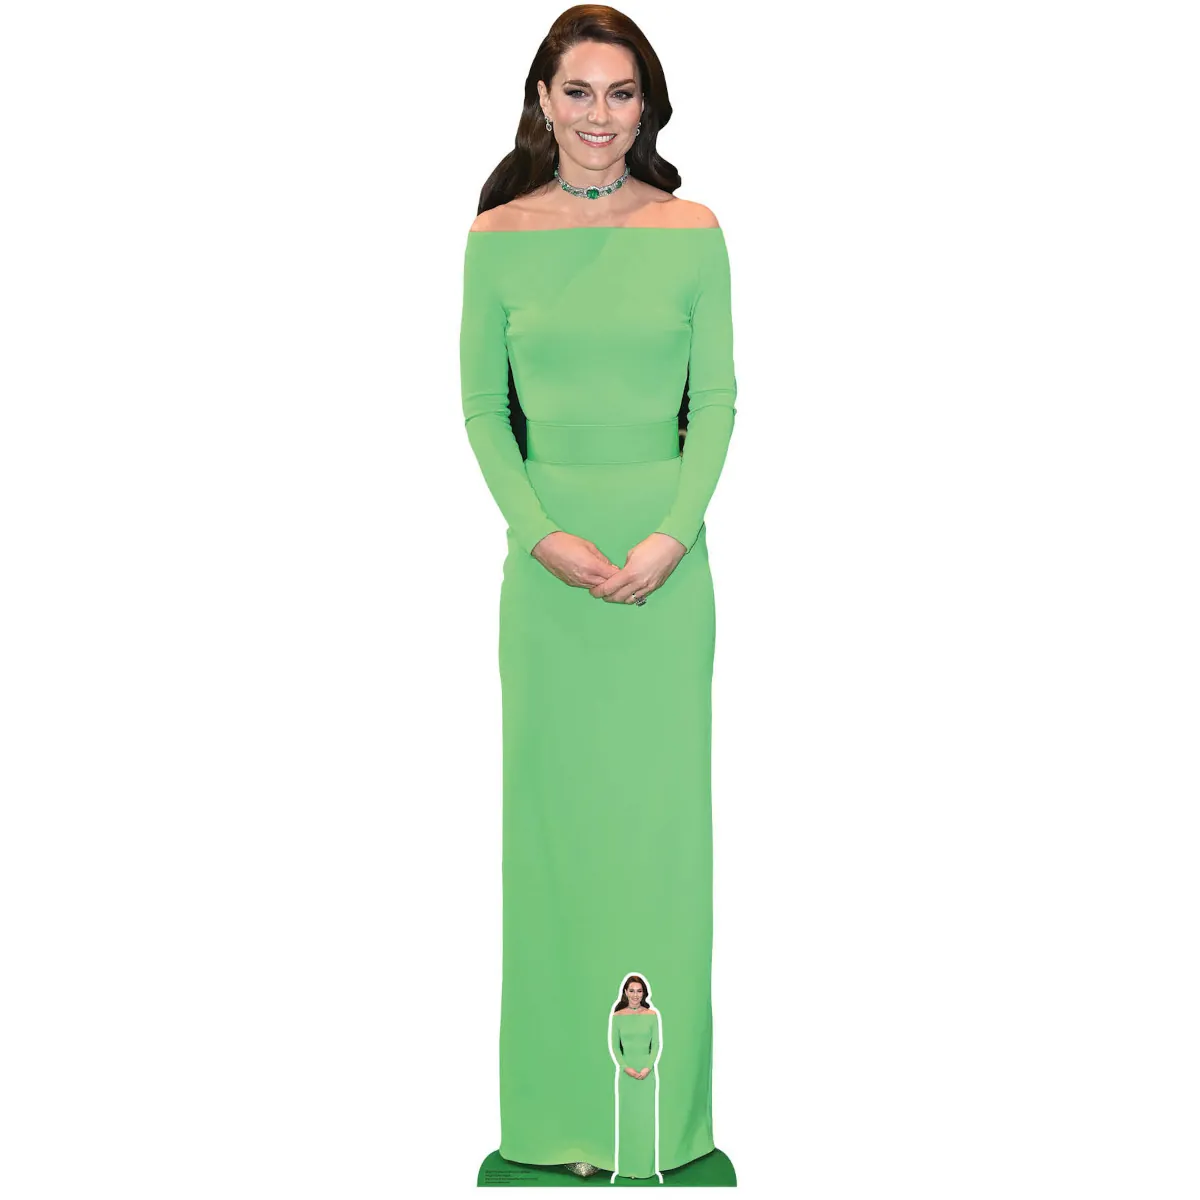 SC4214 Catherine Princess of Wales 'Green Dress' (British Royal) Lifesize + Mini Cardboard Cutout Standee Front